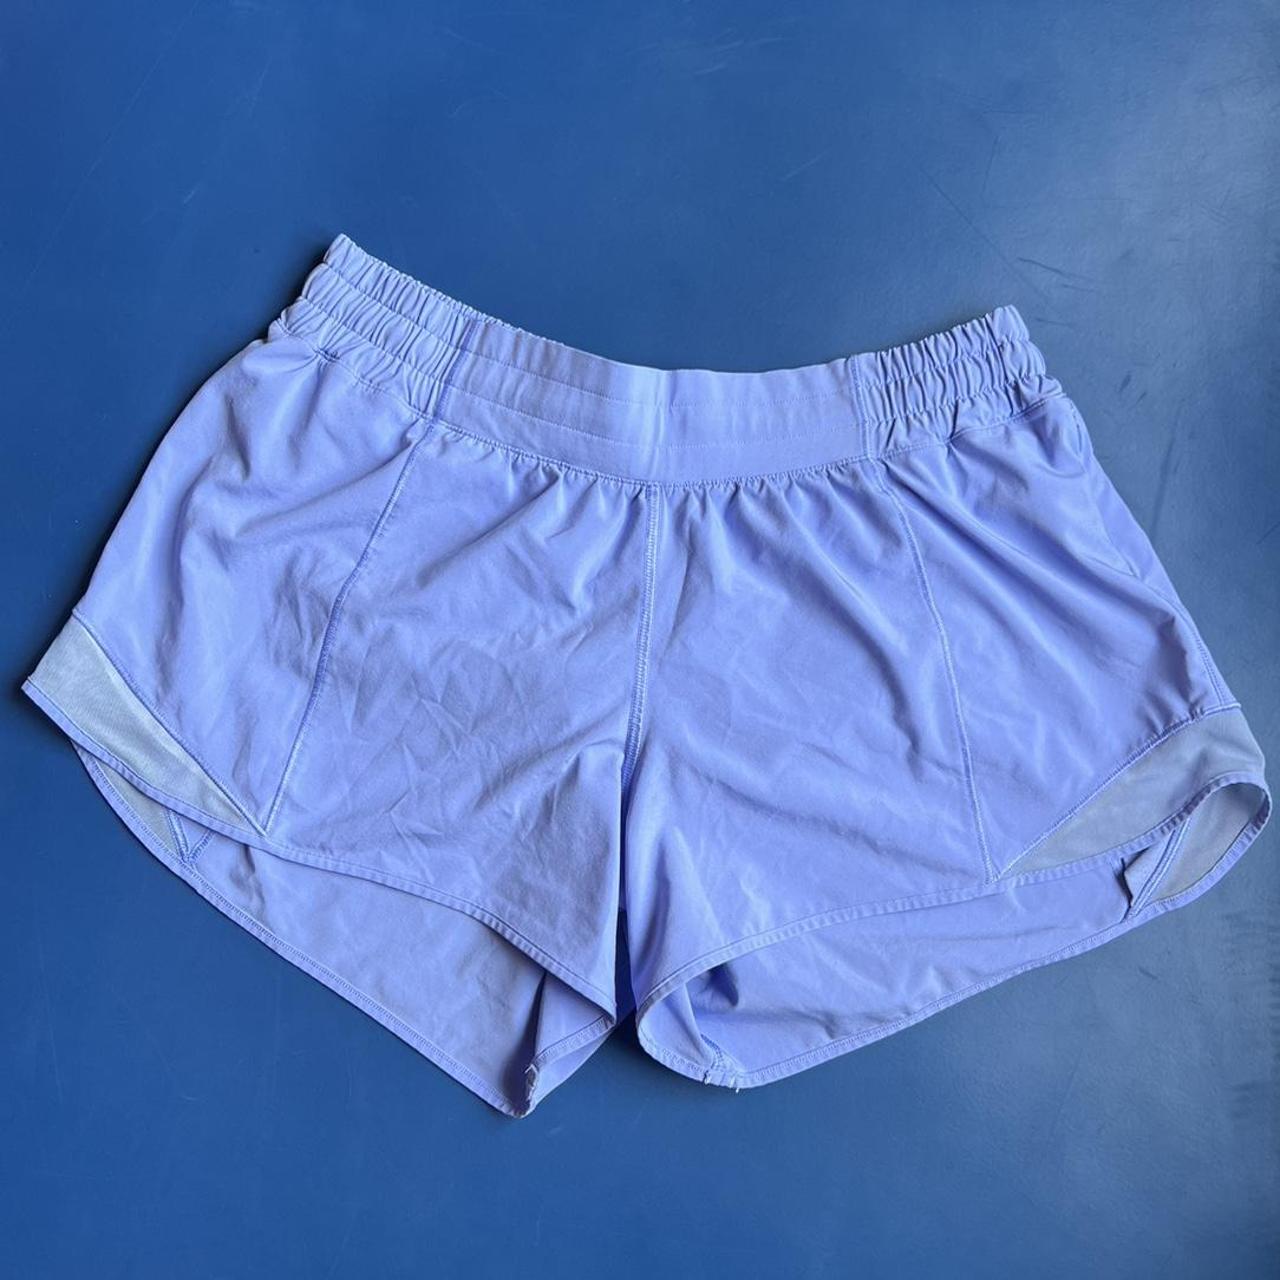 Lavender Purple Lululemon Workout Shorts Size 10,... - Depop